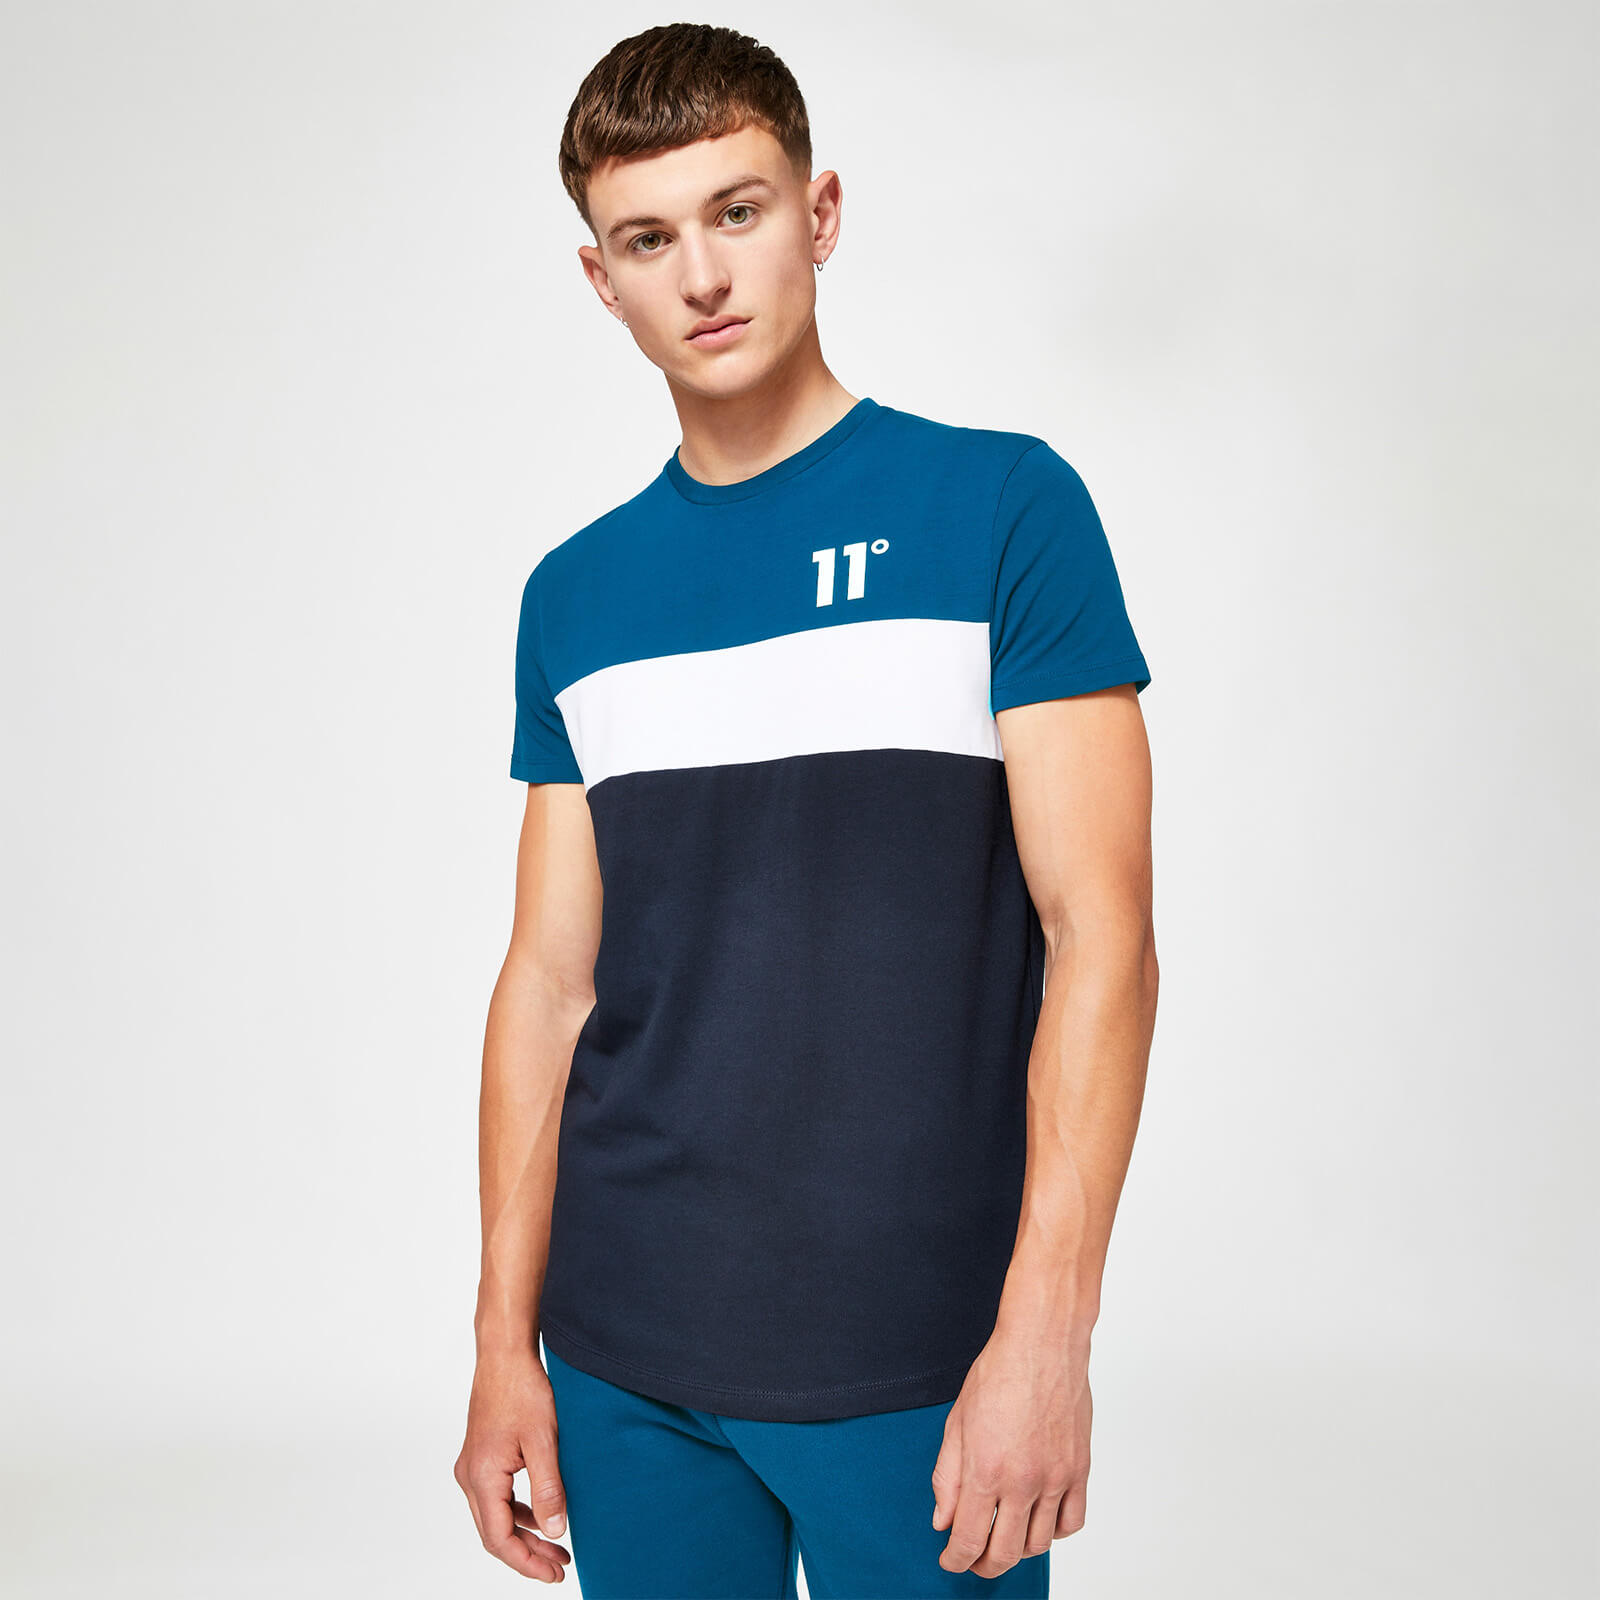 Camiseta Entallada con Panel Triple - Azul / Azul Medianoche / Blanco | 11 Degrees ES